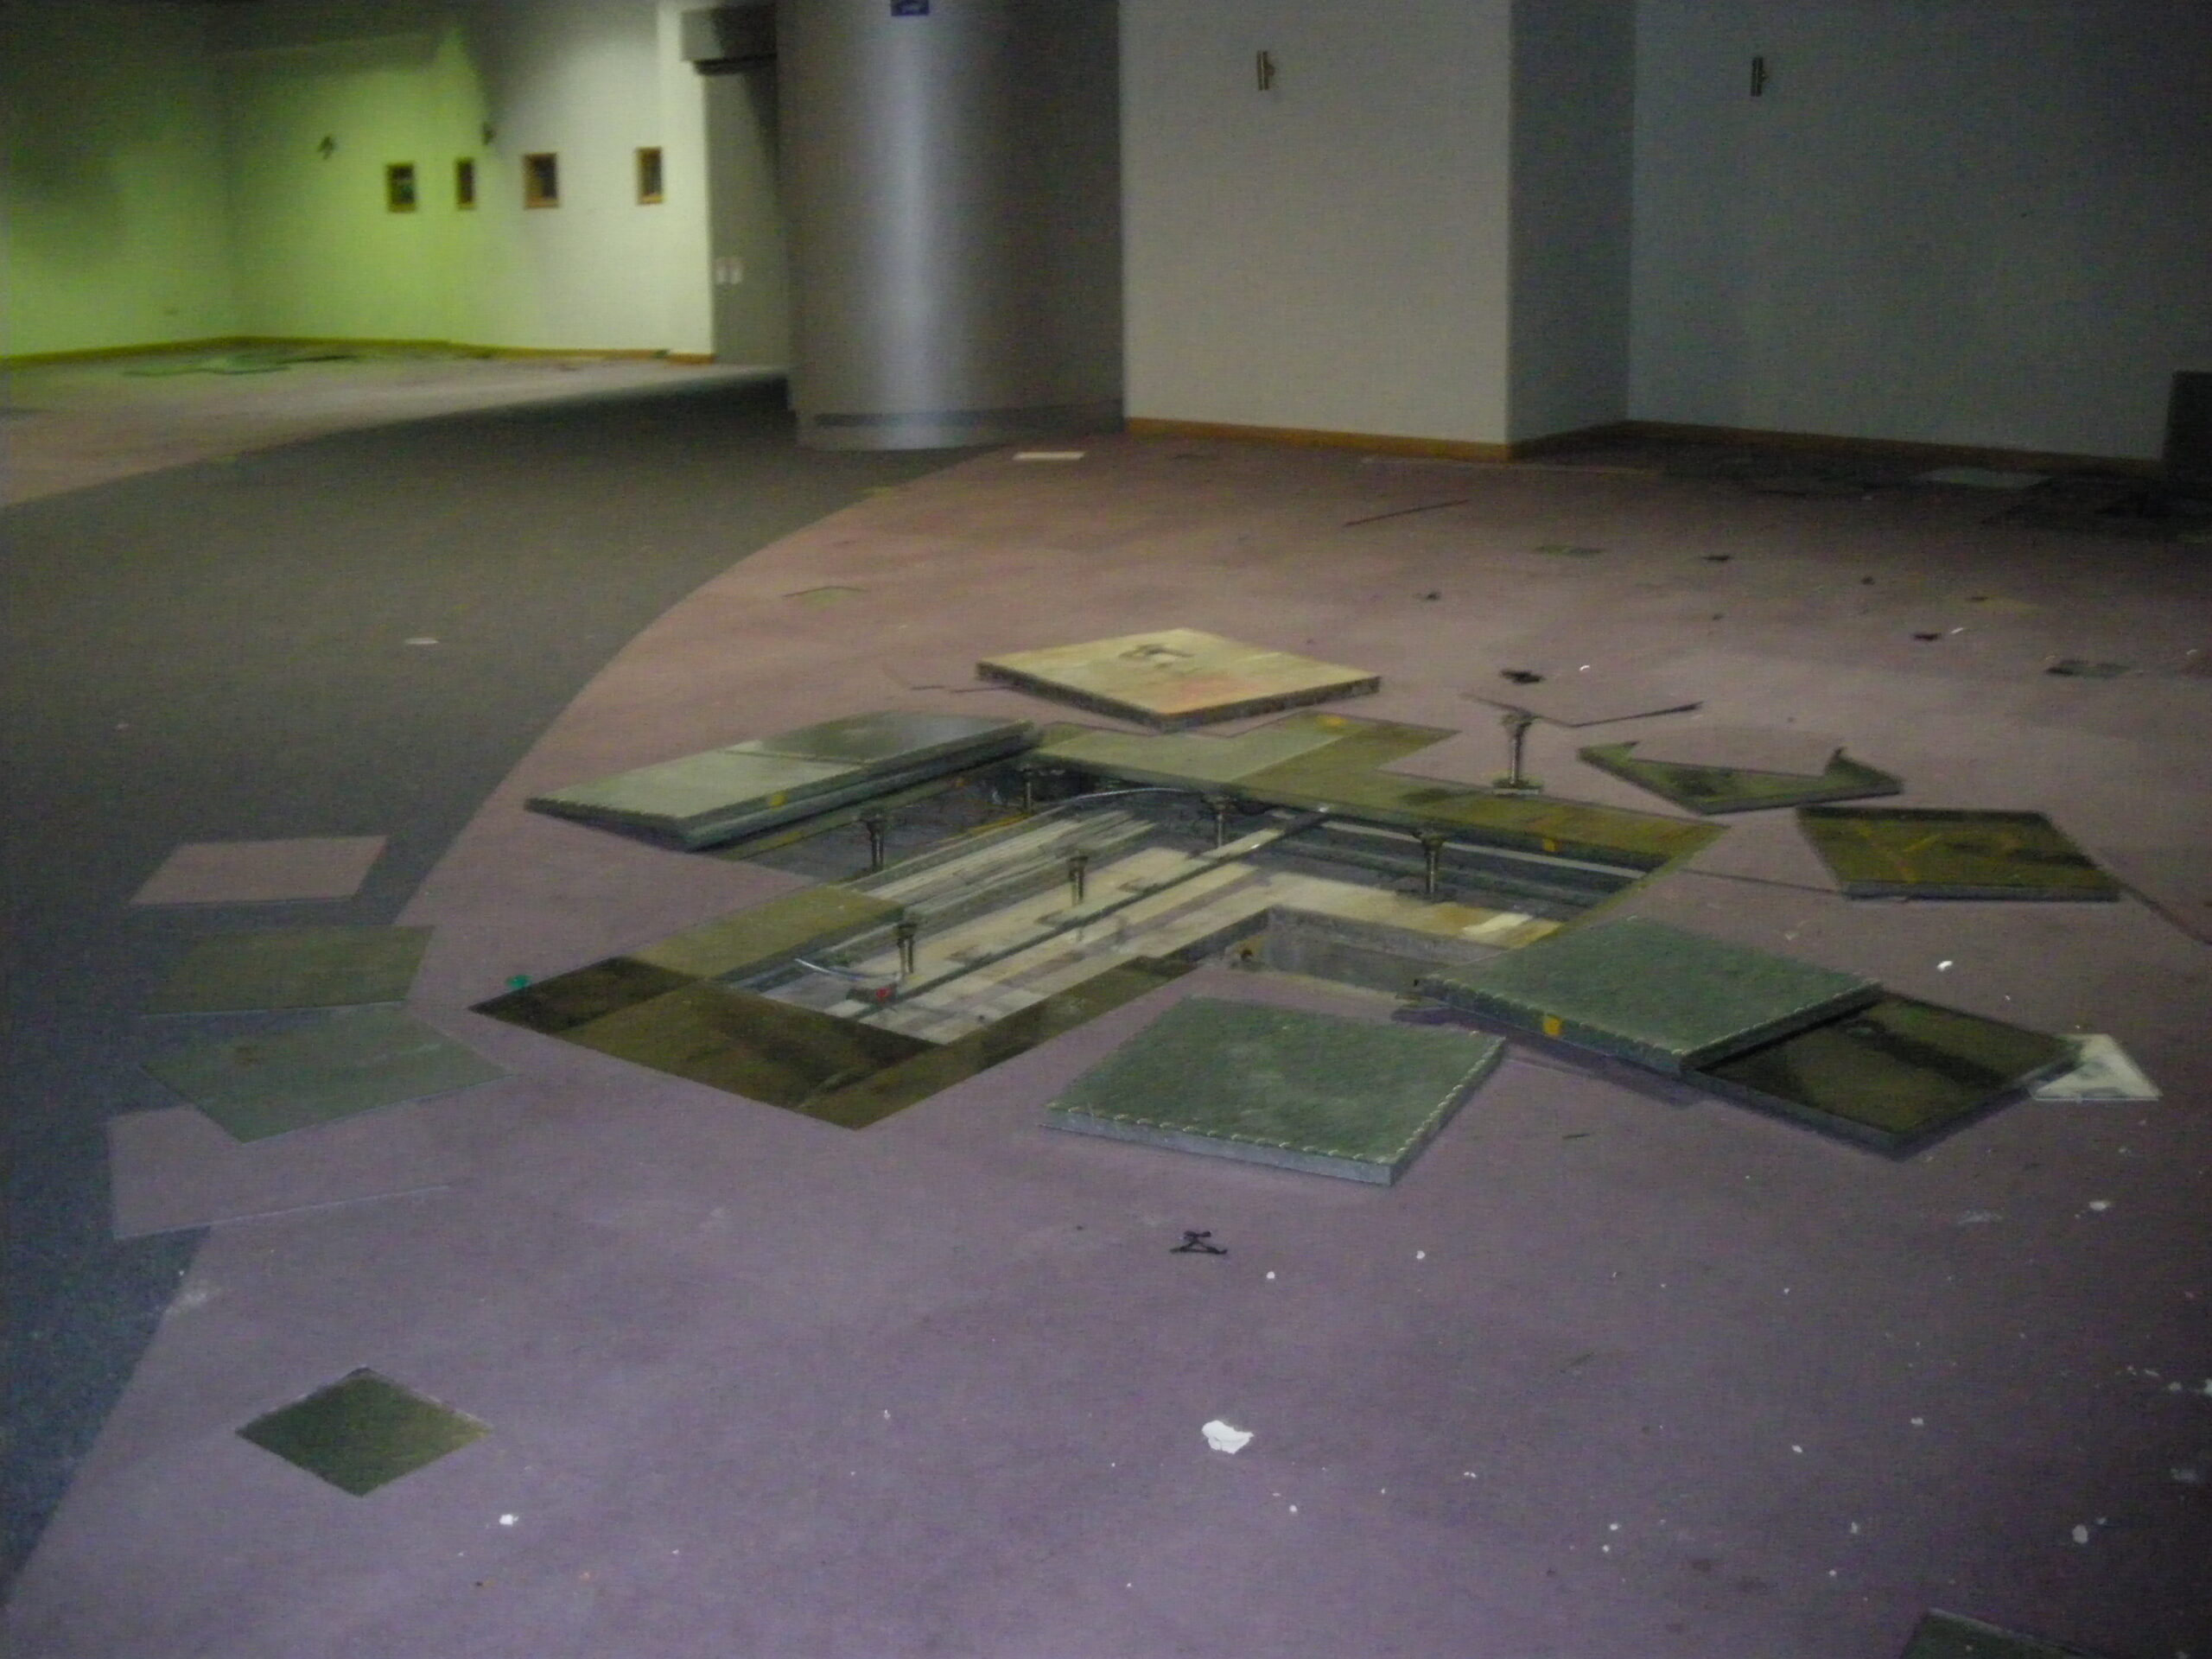 Business Centre raised flooring system, 11 Sep 2011